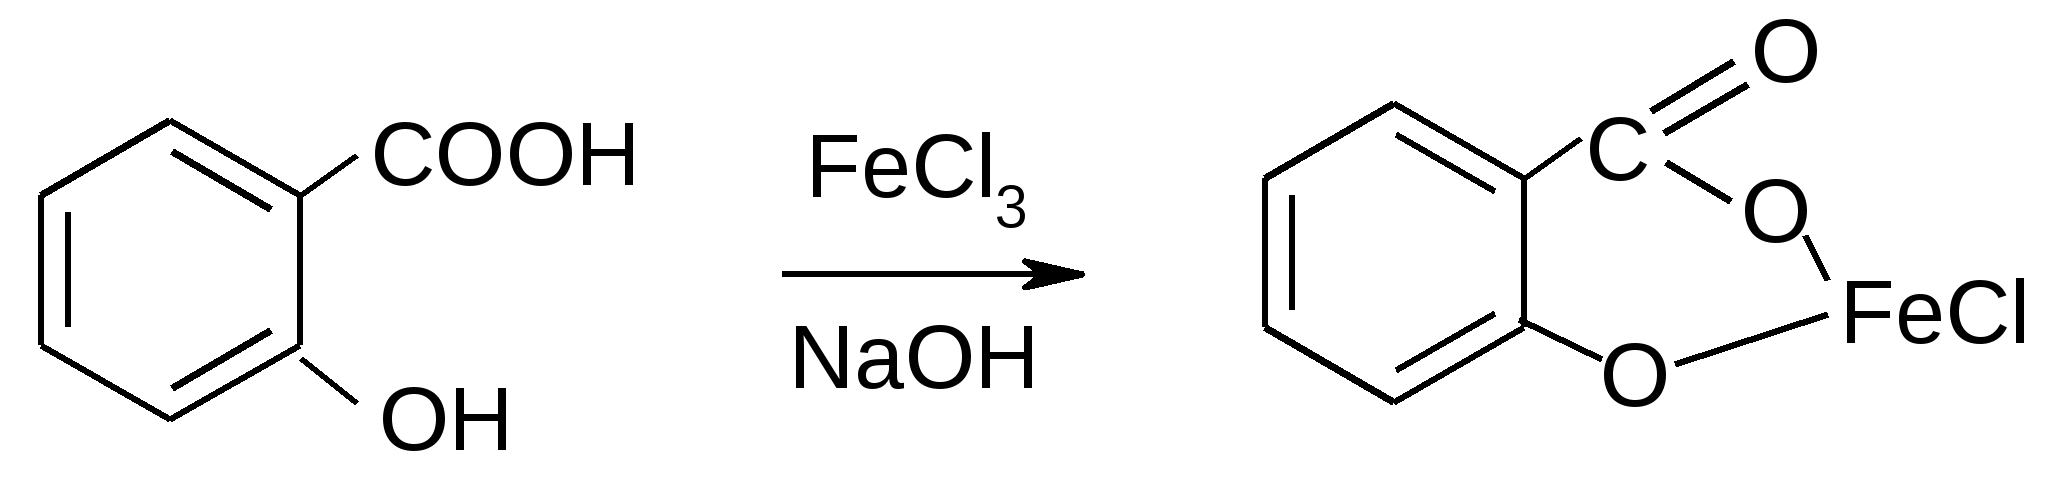 Салициловая кислота NAOH. Салициловая кислота + хлорное железо реакция. Салициловая кислота и щелочь реакция. Салициловая кислота с хлоридом железа 3 образуется. Гидролиз аспирина